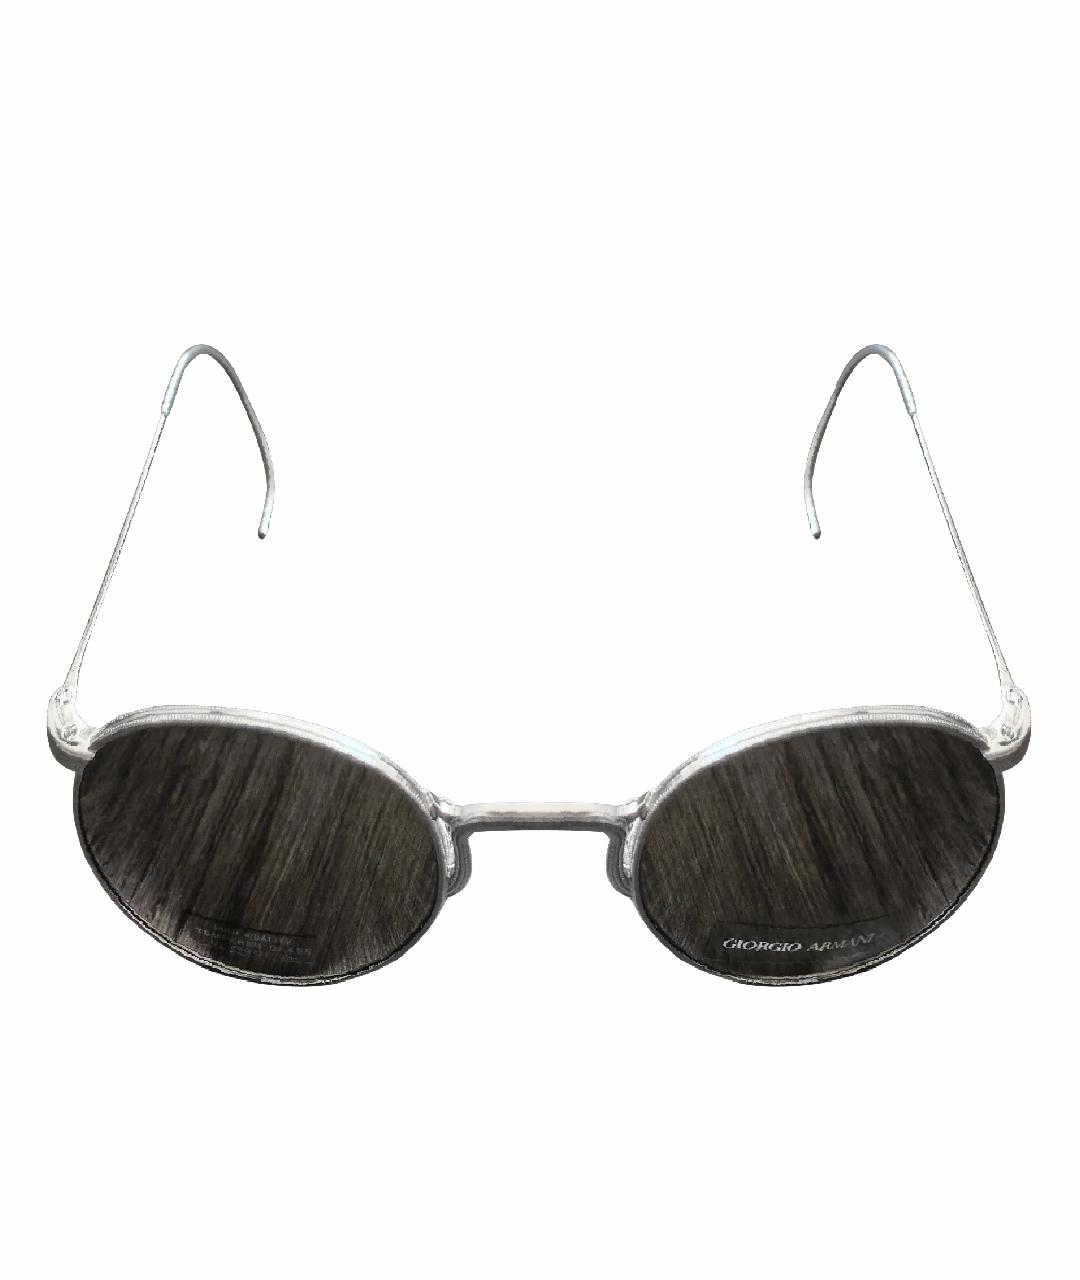 GIORGIO ARMANI Белые металлические солнцезащитные очки, фото 1